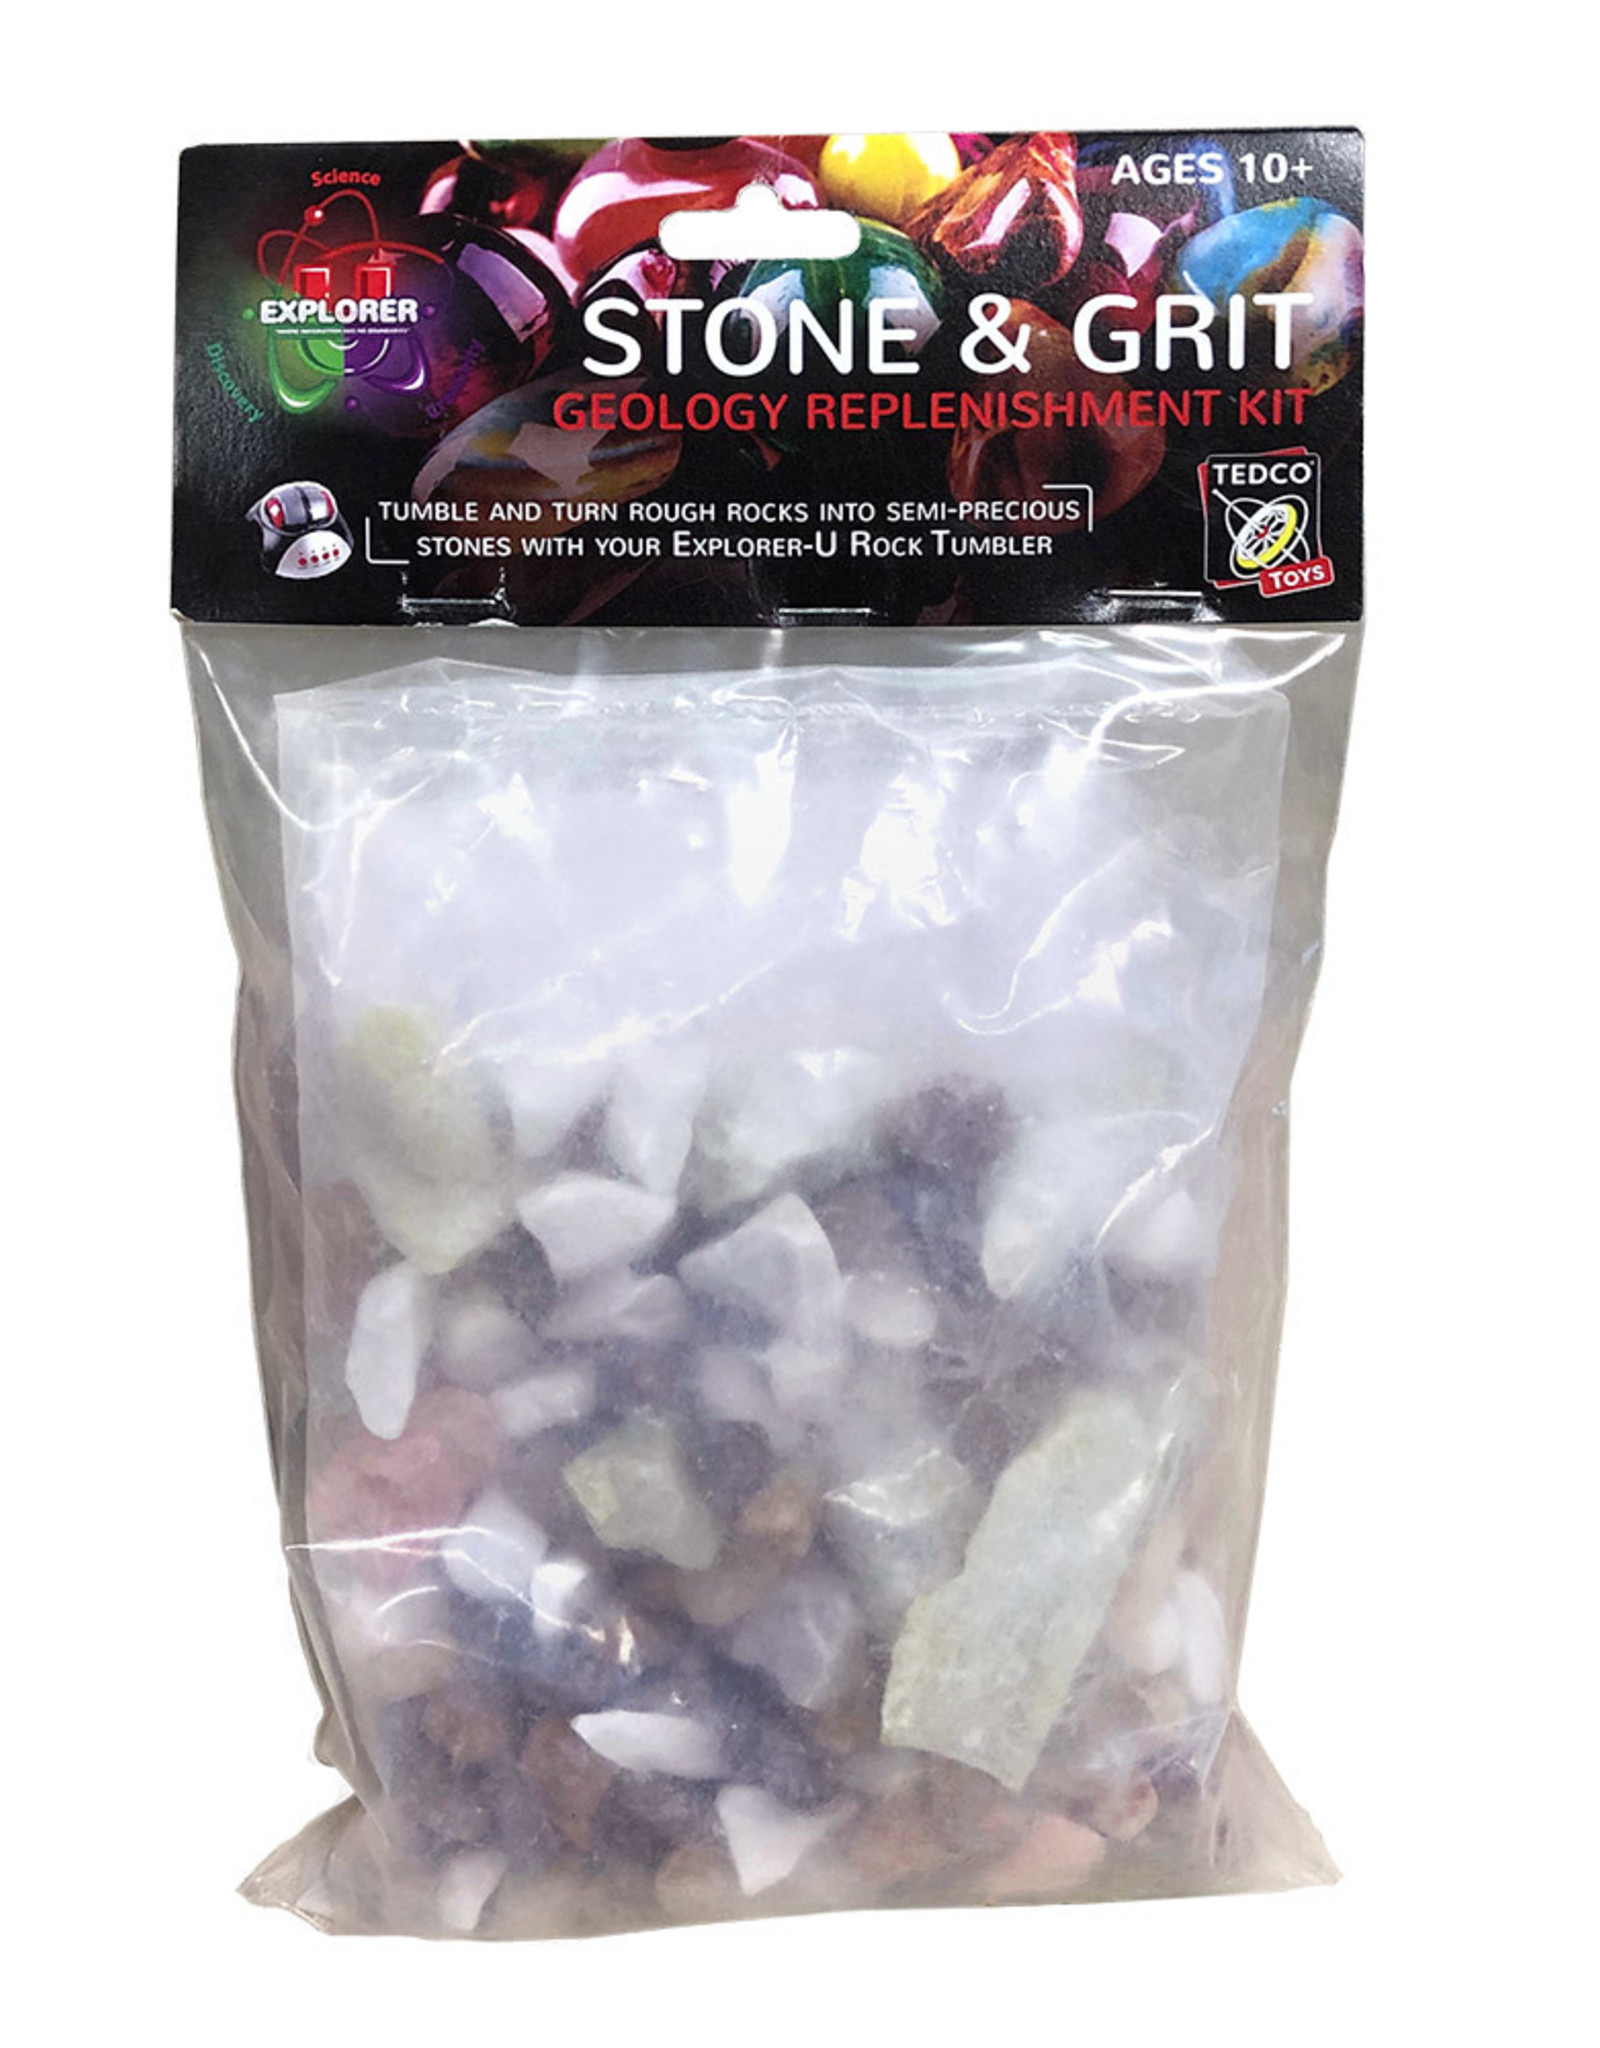 TEDCO Stone & Grit Kit